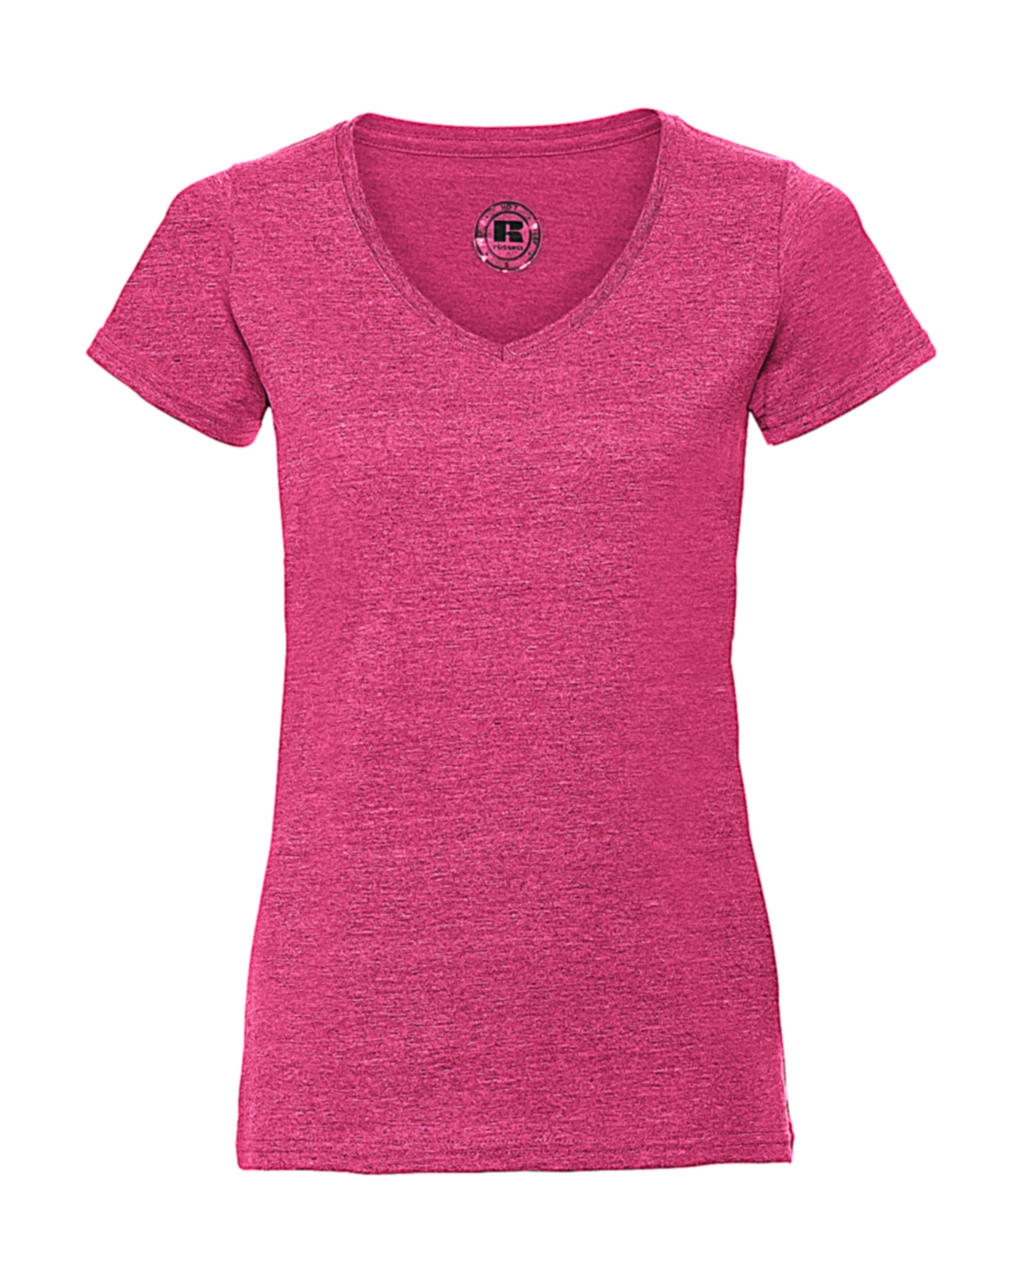 Dámske tričko HD s V-výstrihom - pink marl